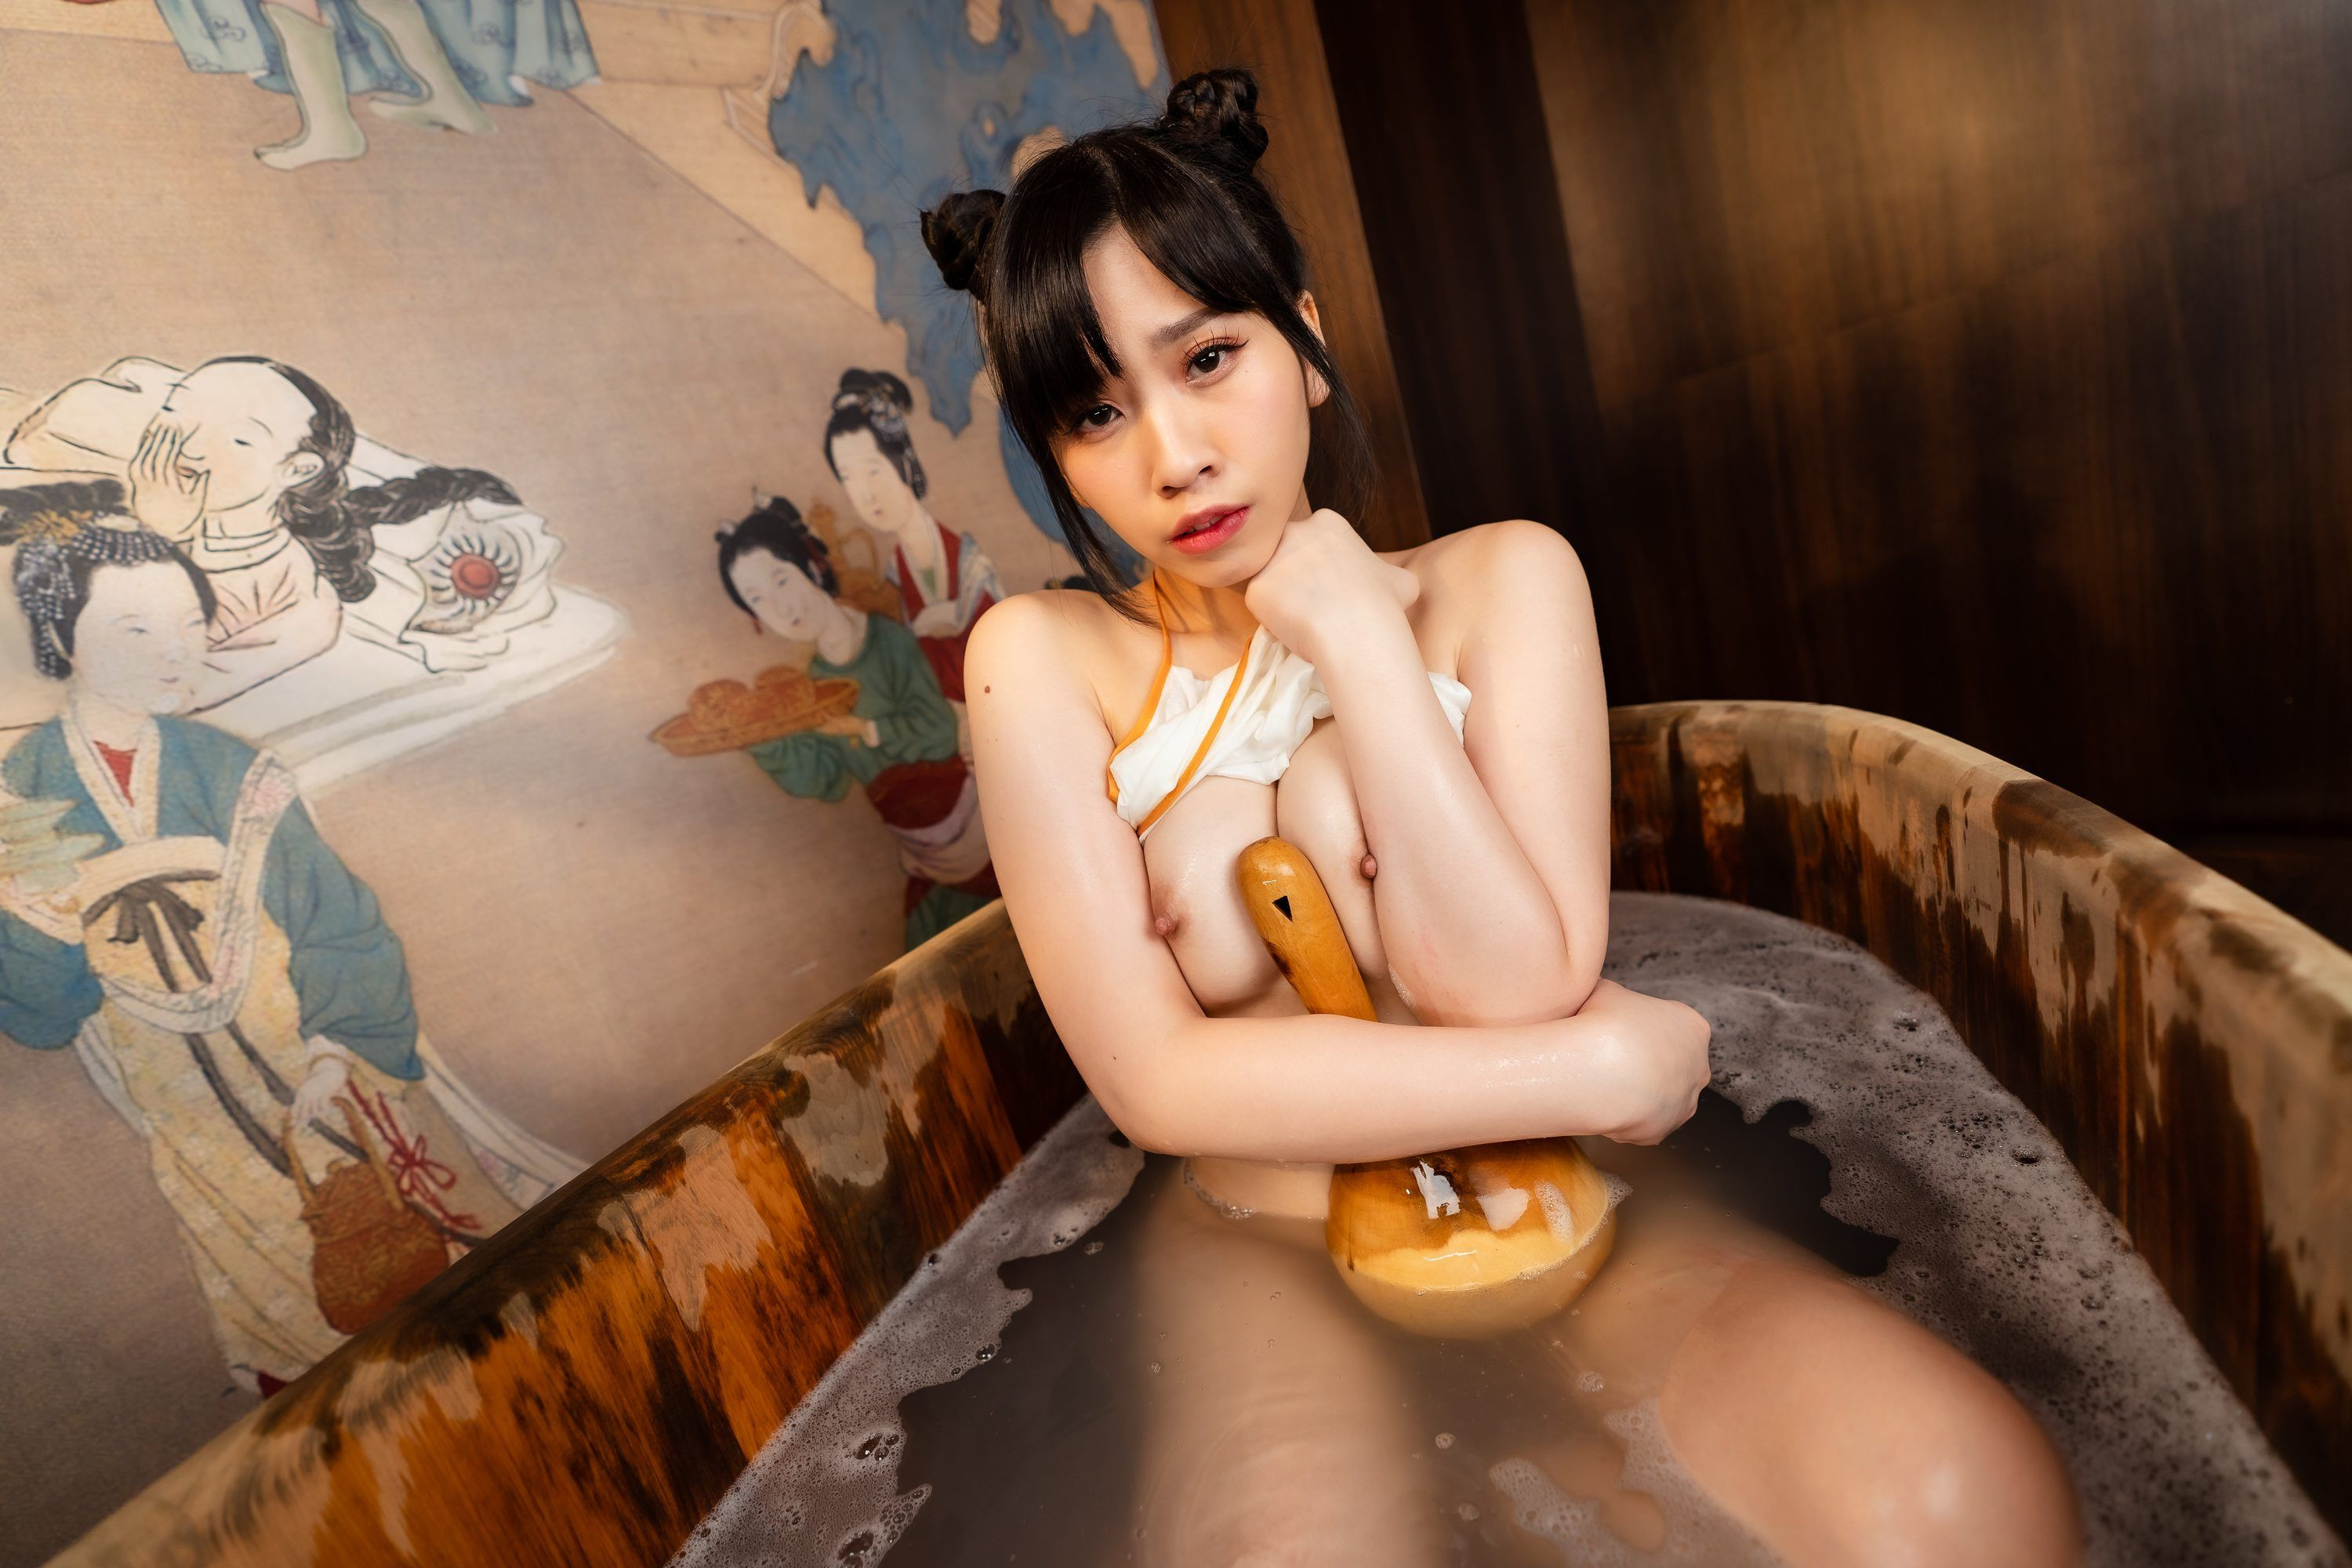 Mutual Masturbating With Asian Girl In Bubble Bath Slideshow